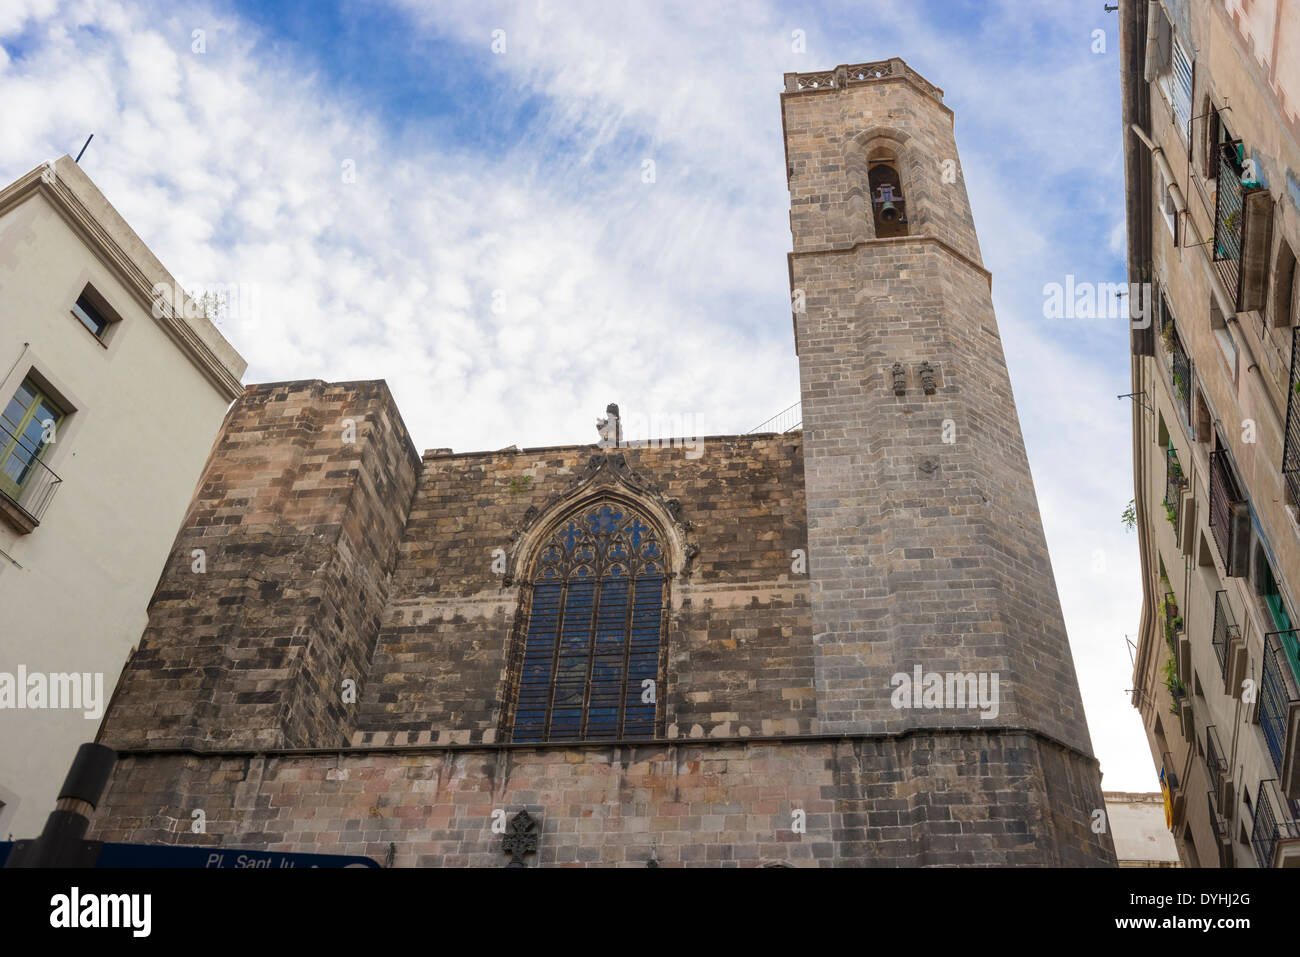 Barcelona: Gothic Cathedral of Santa Eulalia in Barri Gotic district (Gothic Quarter). Barcelona, Catalonia, Spain Stock Photo